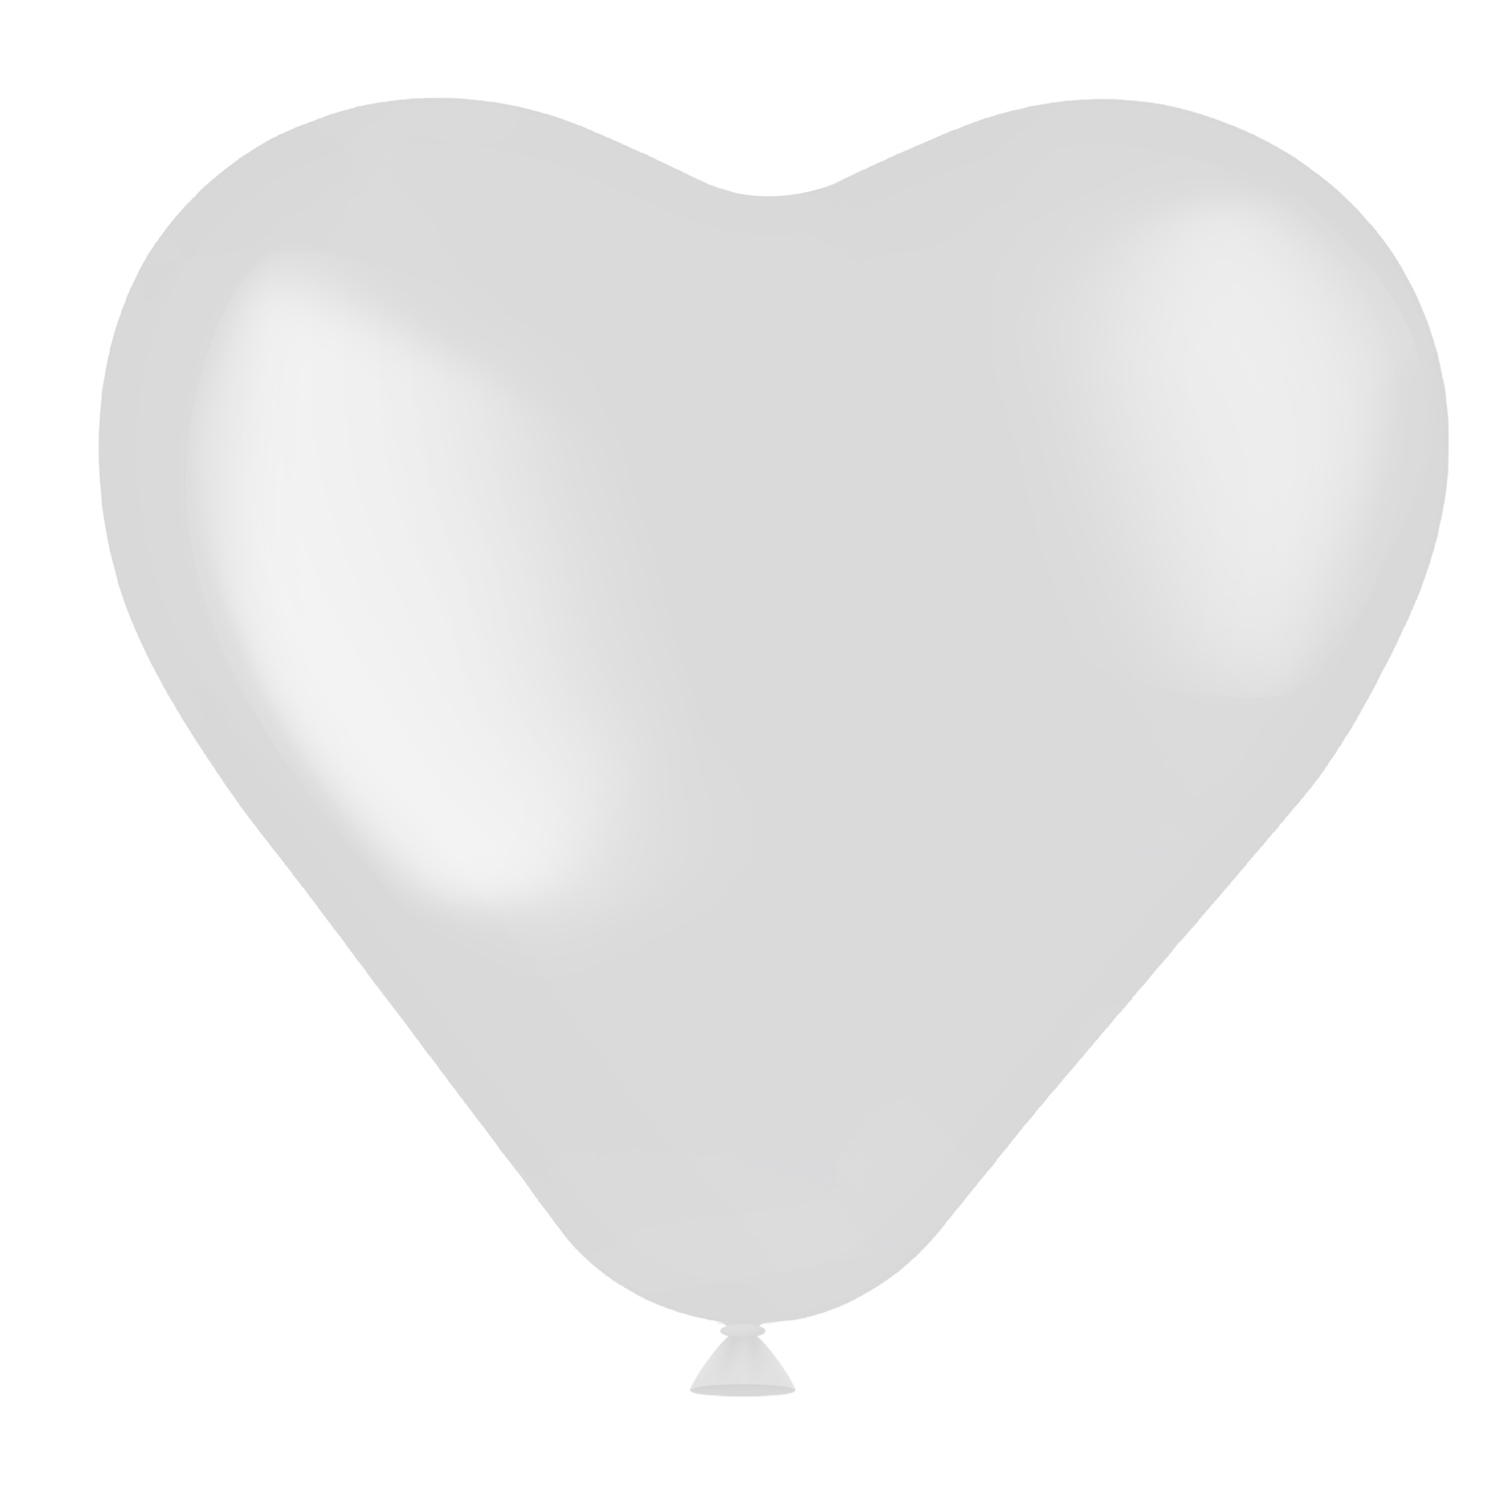 Latex-Luftballons in Herzform, 25cm, weiß, 8 Stück, Herzballons